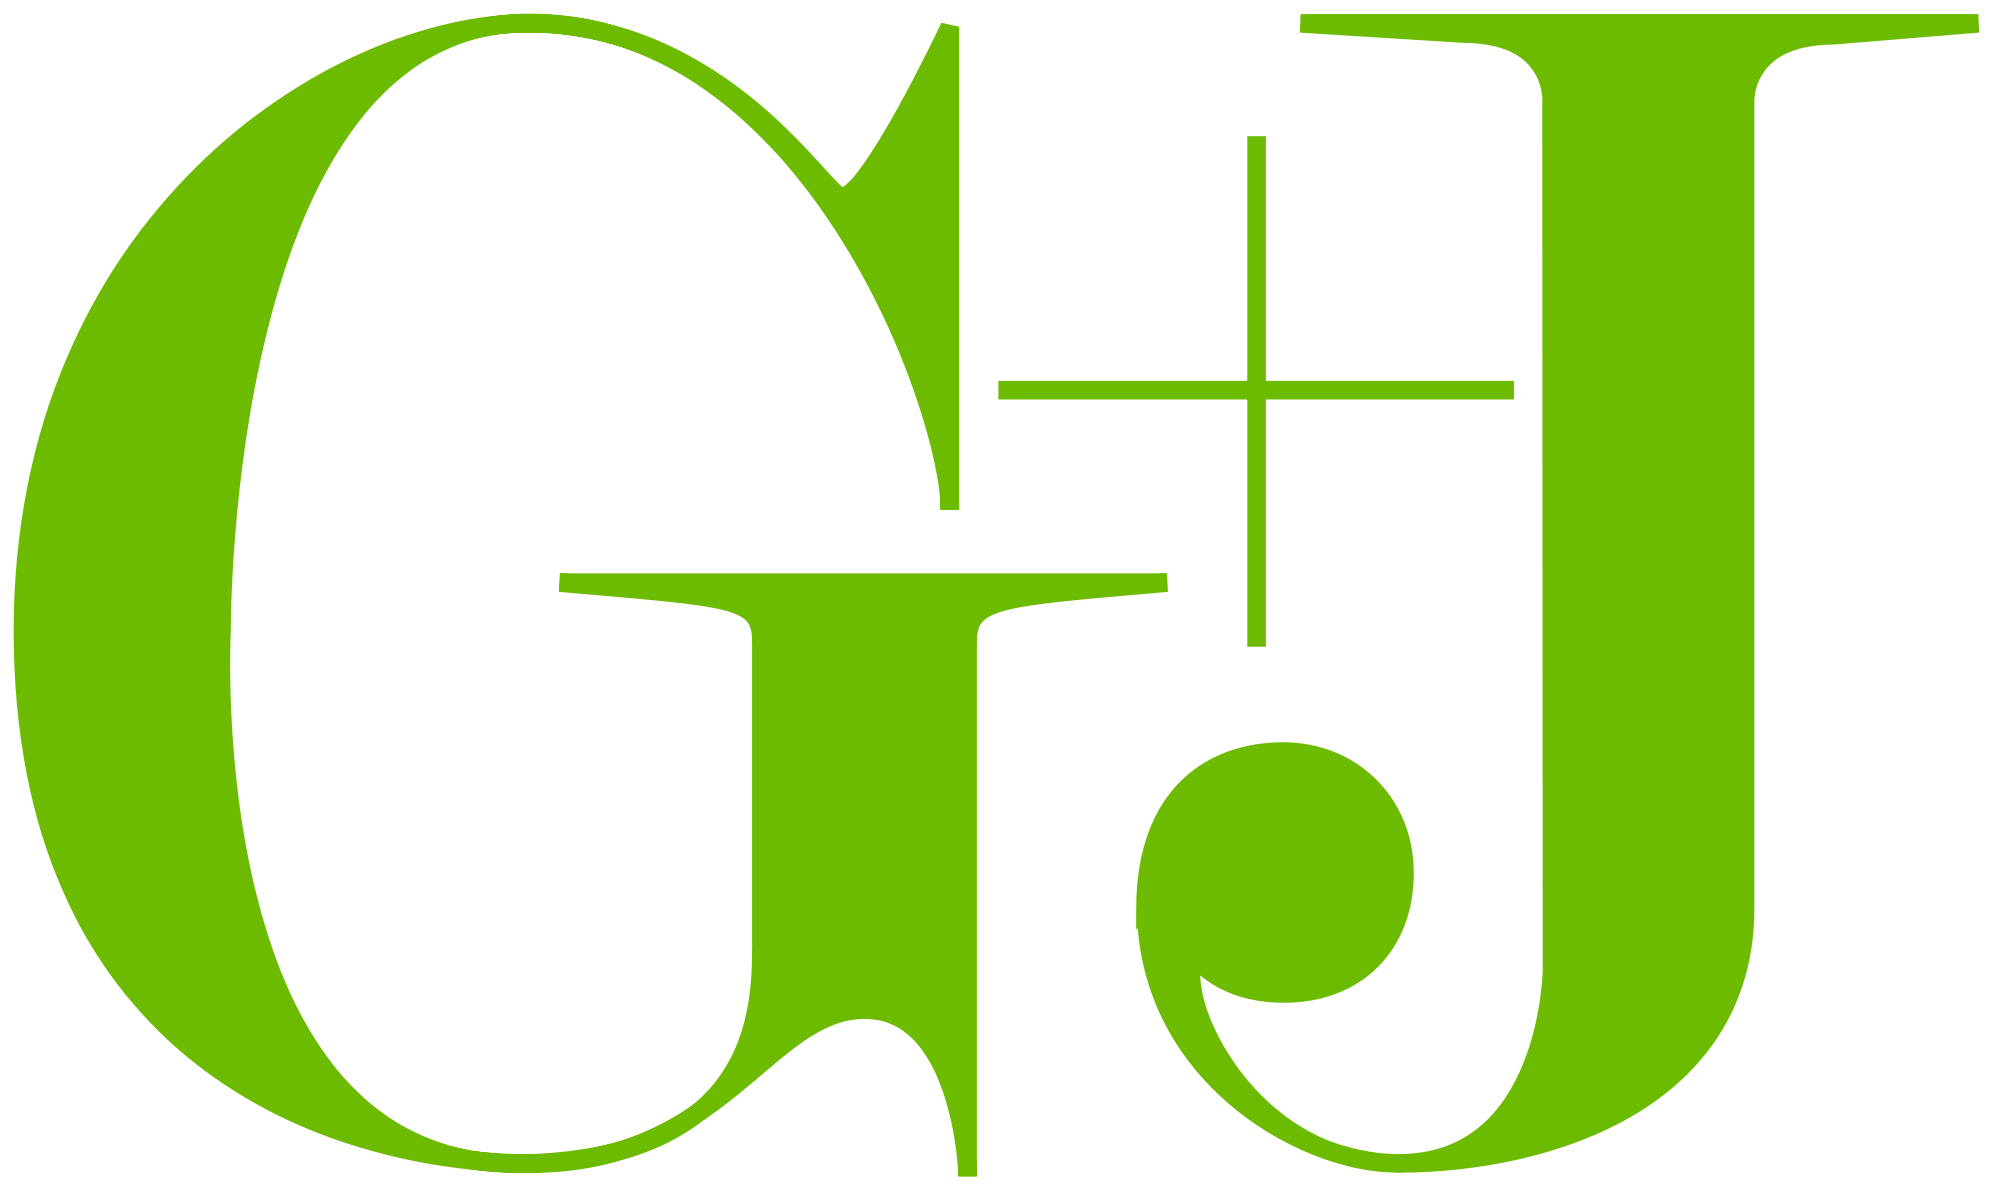 Logo German Physiks